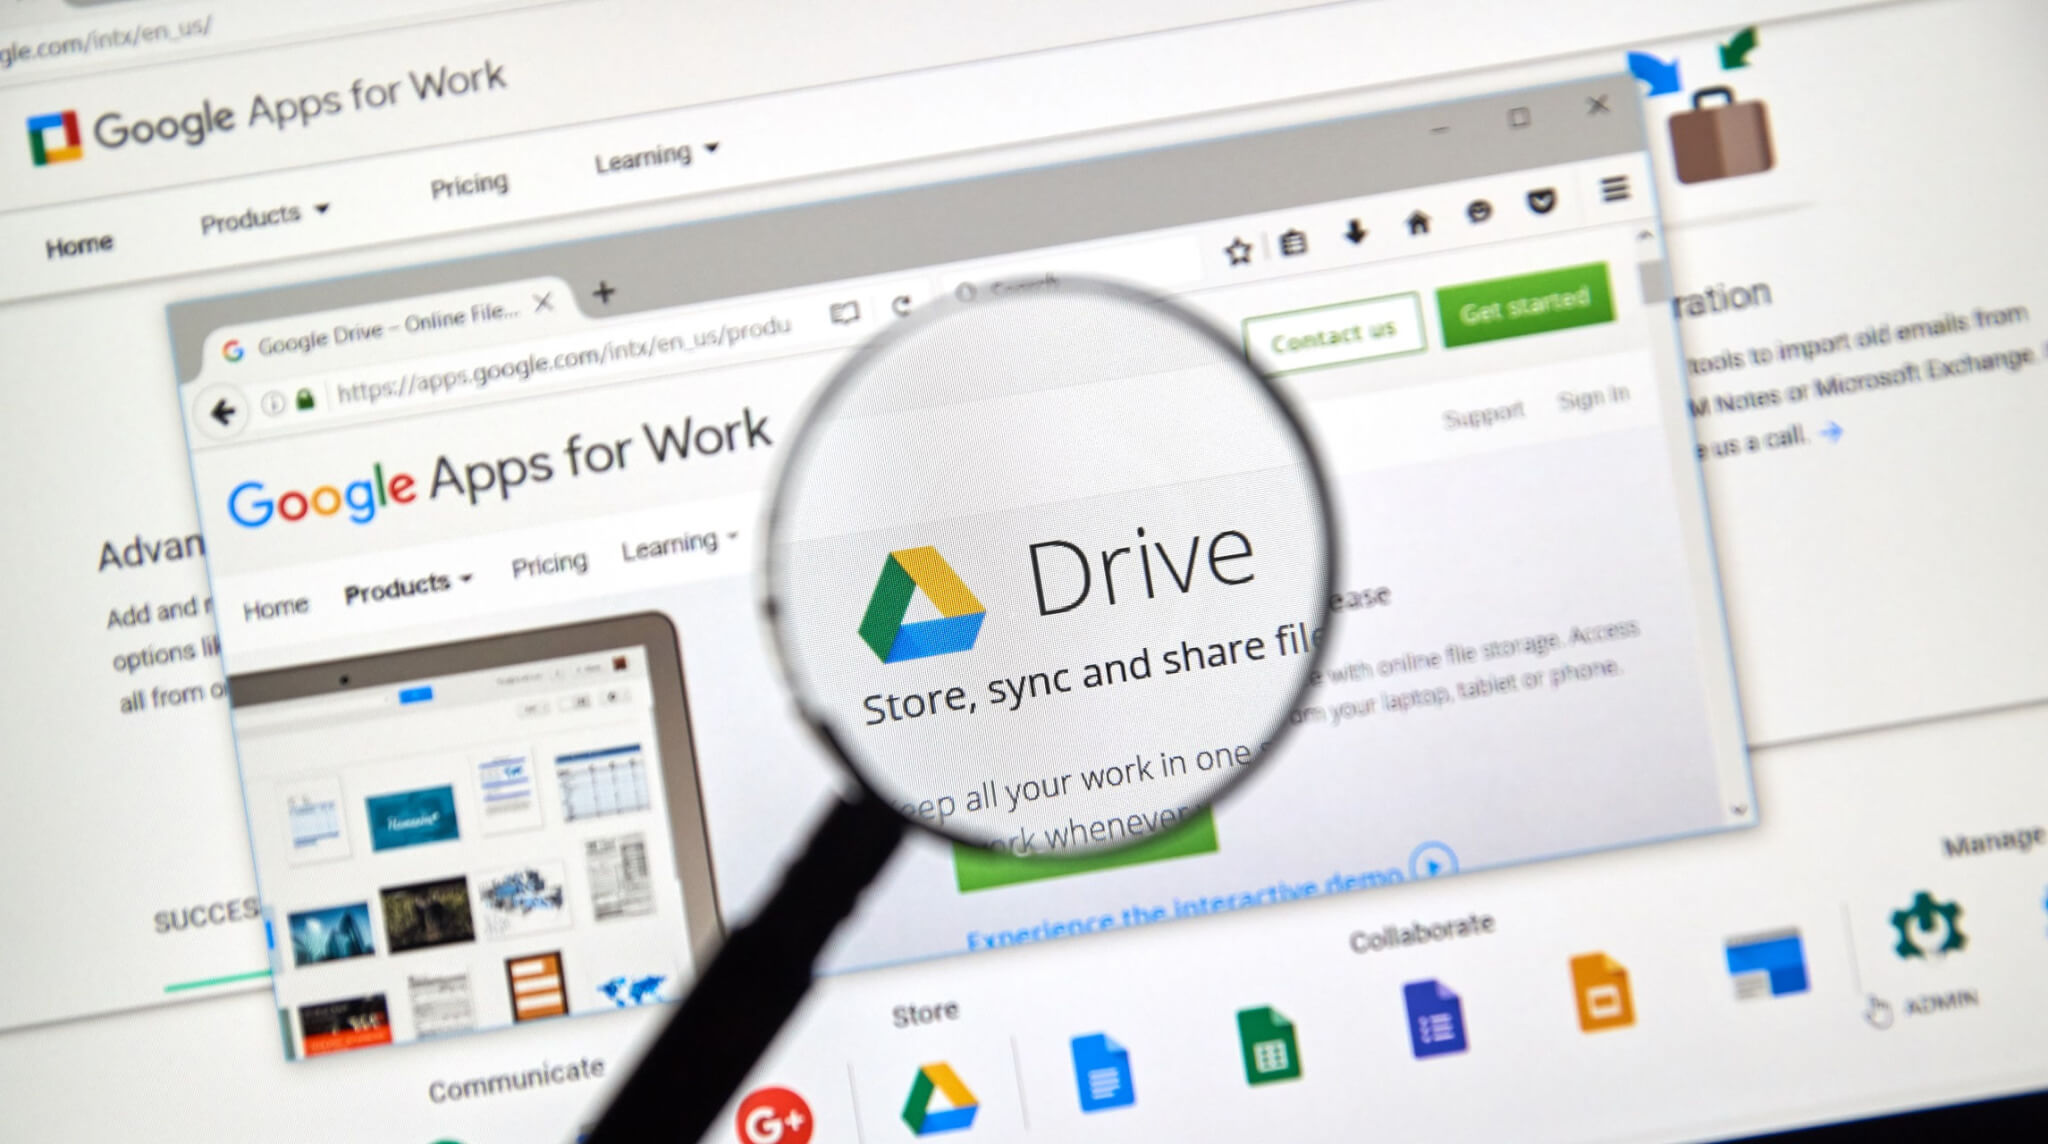 Remove duplicate files in Google Drive